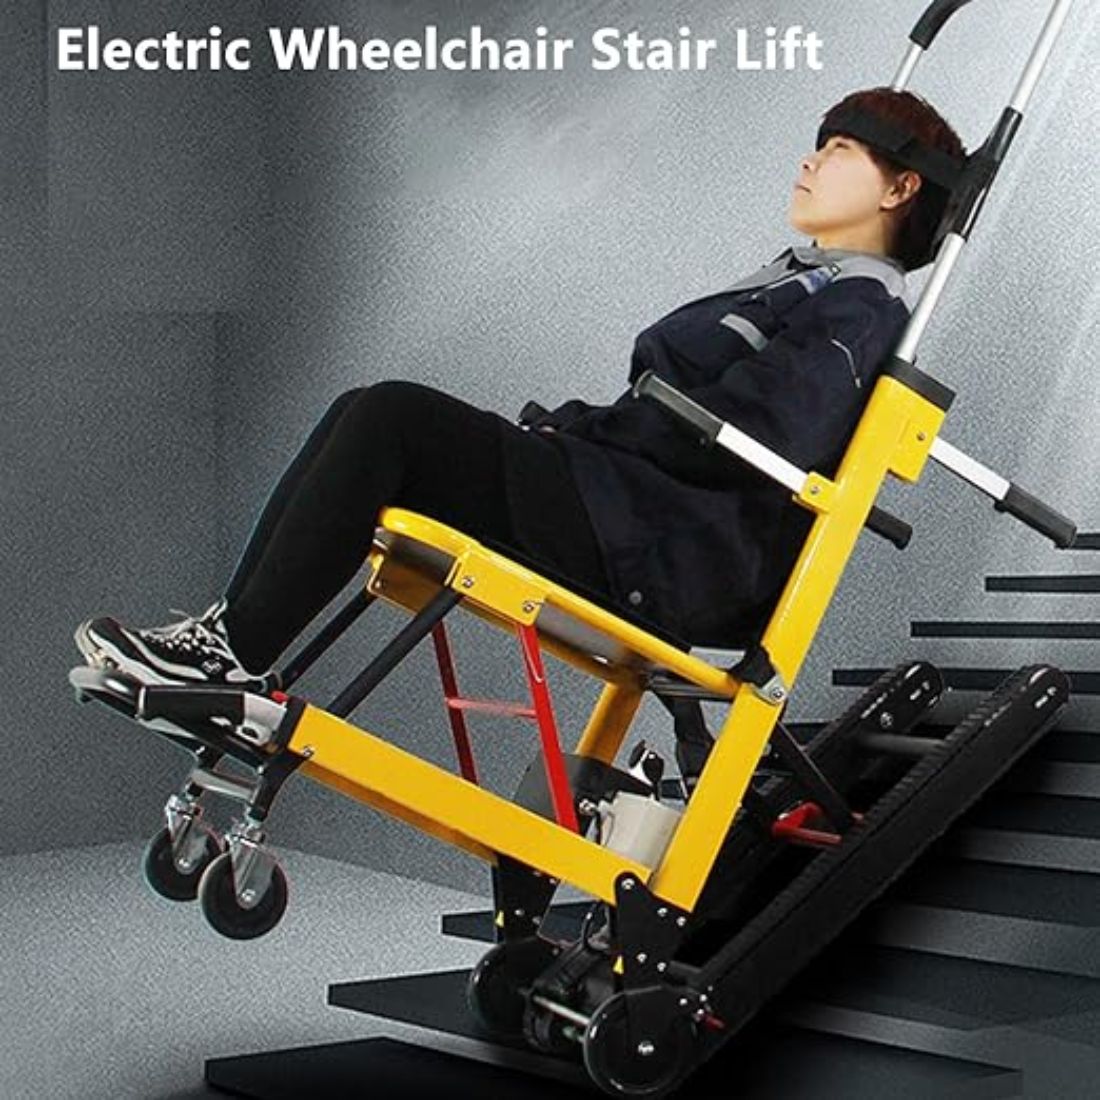 Electric Staircase Climbing Wheelchair - Battery Powered stair wheelchair